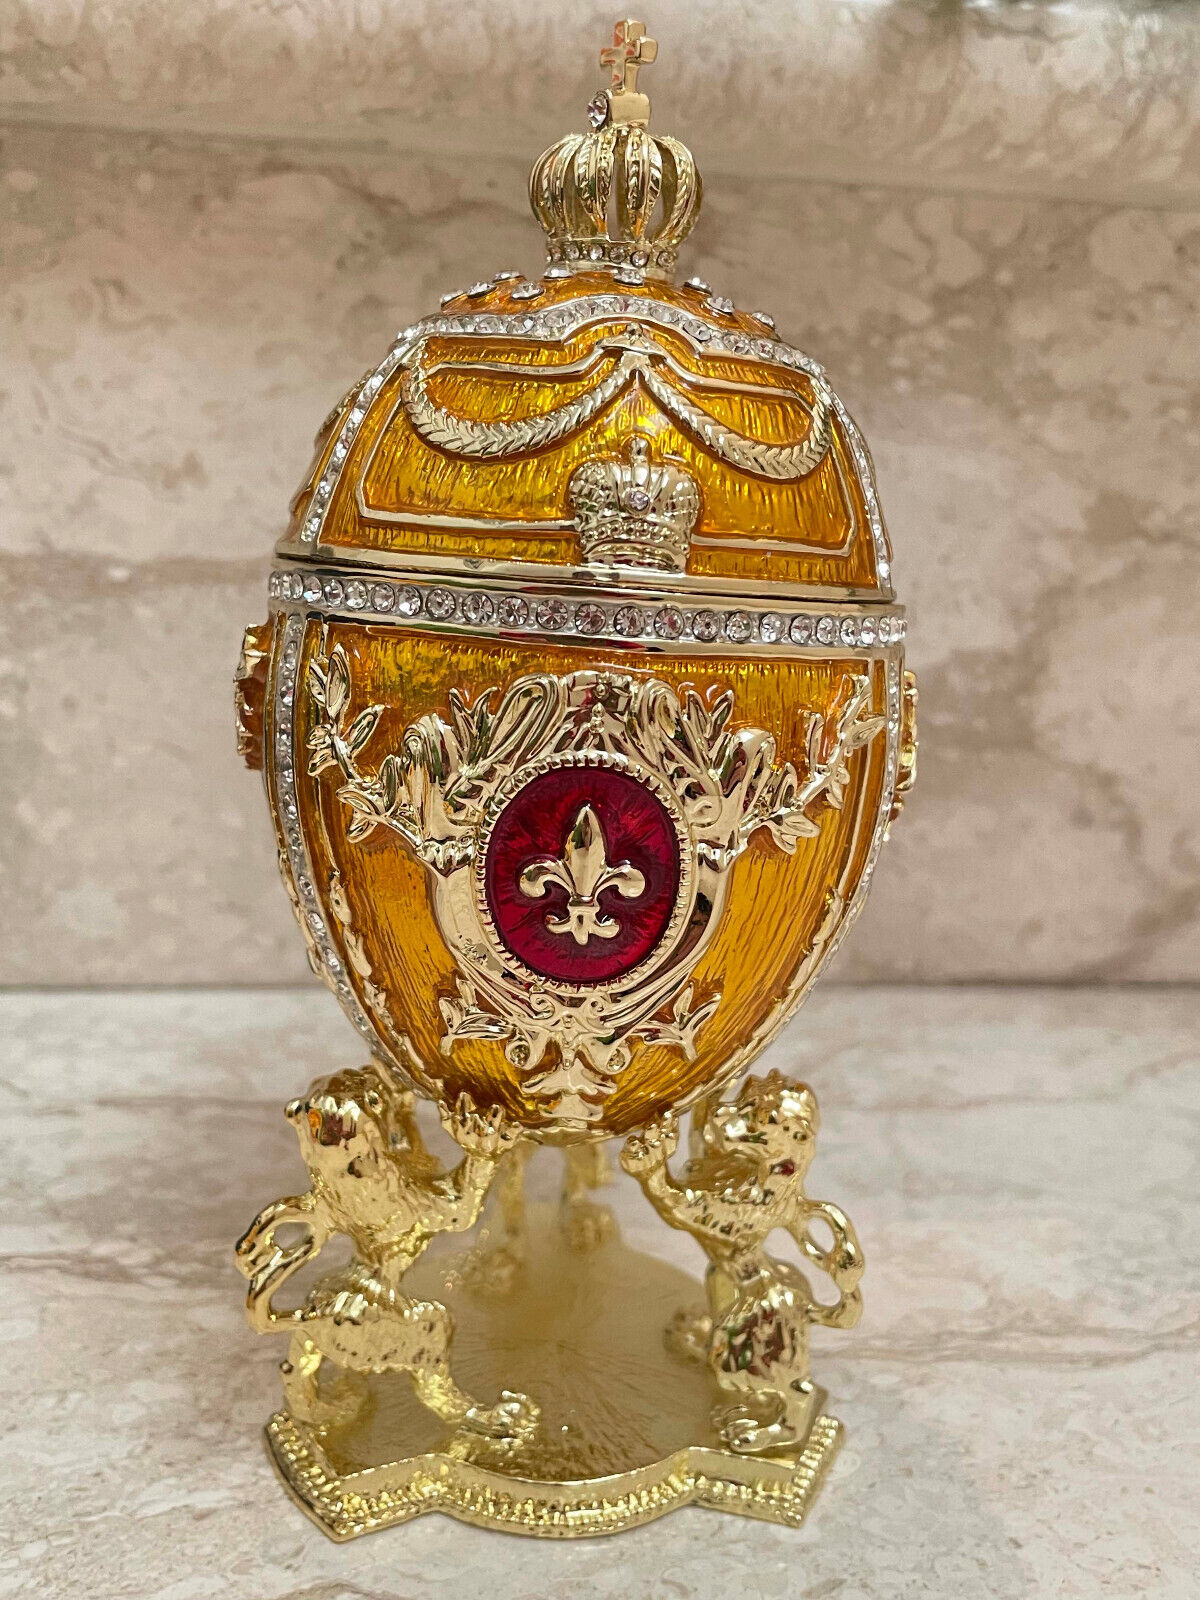 Luxury FABERGE egg HANDMADE Jewelry box 24k GOLD Swarvoski Handset Mothers Day